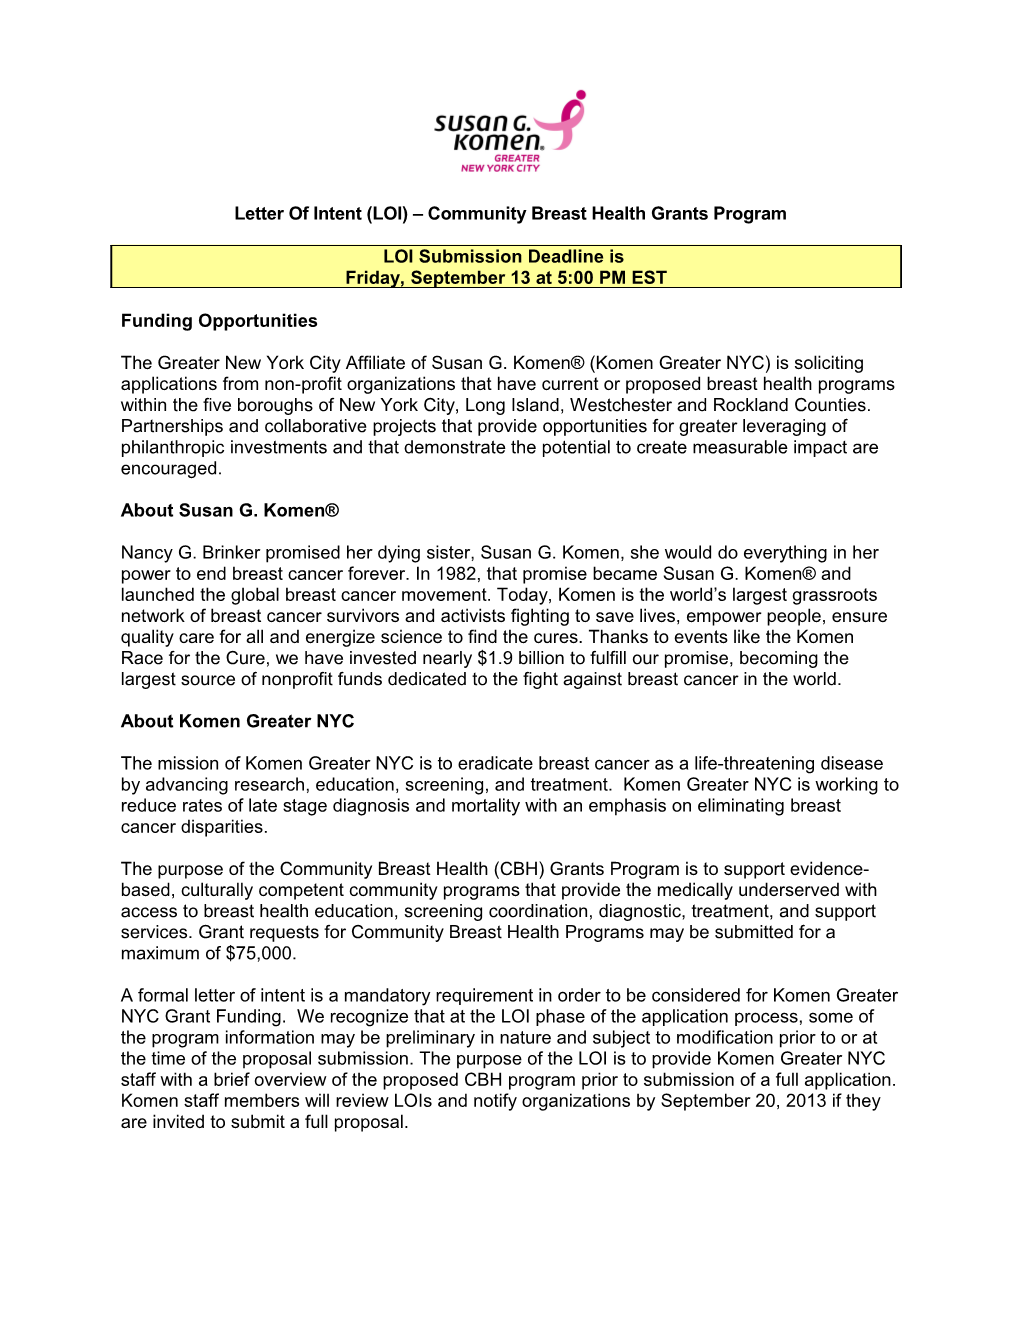 Letter of Intent (LOI) Community Breast Health Grants Program